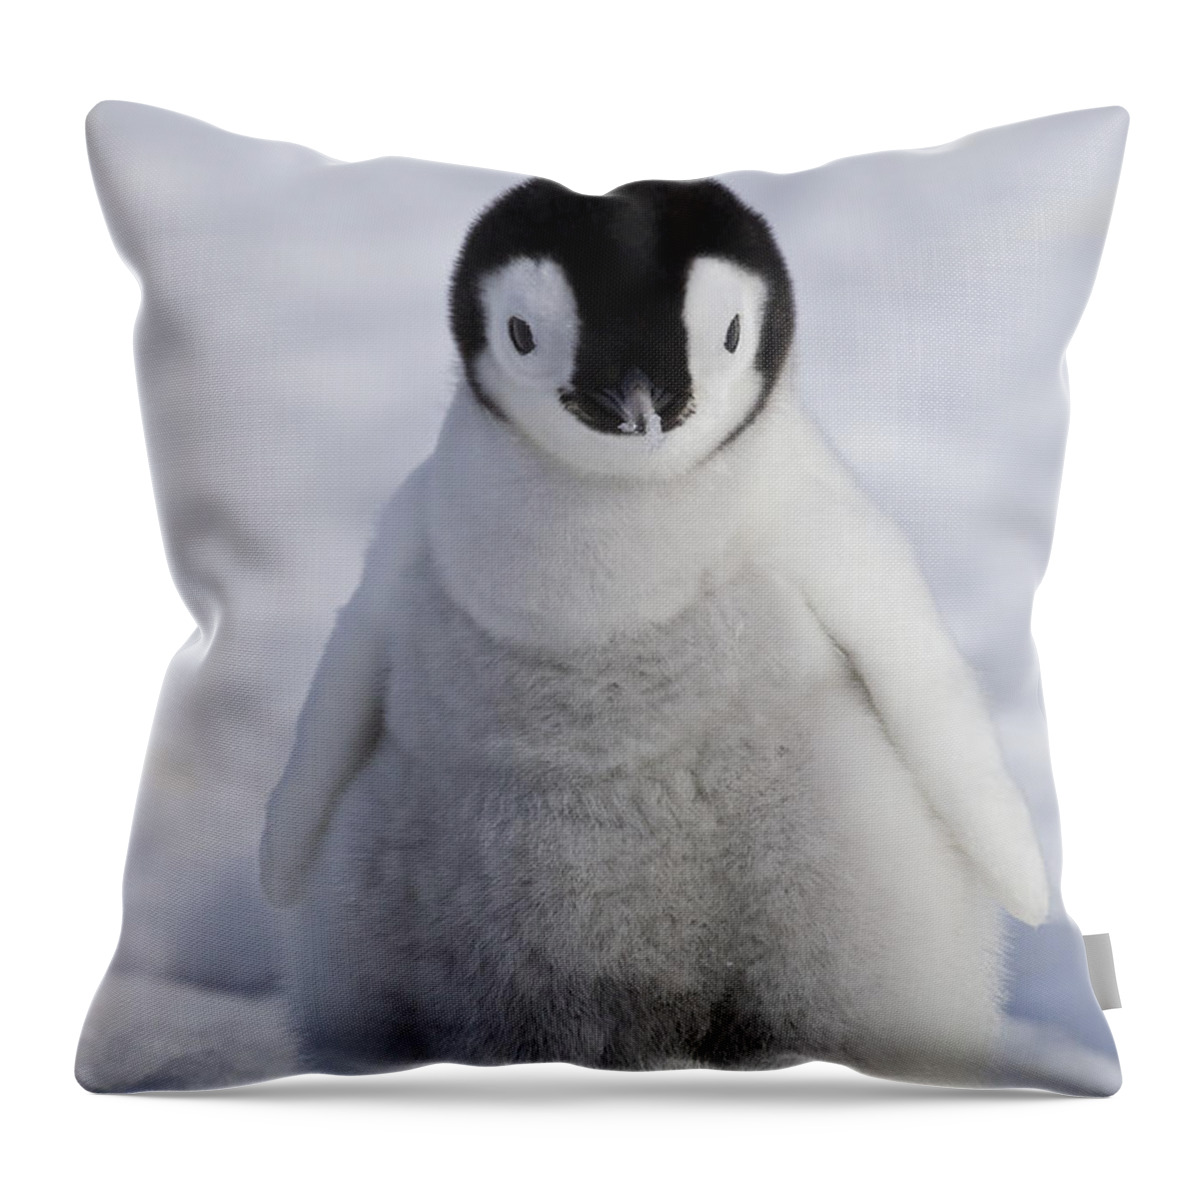 Emperor Penguin Throw Pillow featuring the photograph Emperor Penguin Chick #3 by Jean-Louis Klein & Marie-Luce Hubert